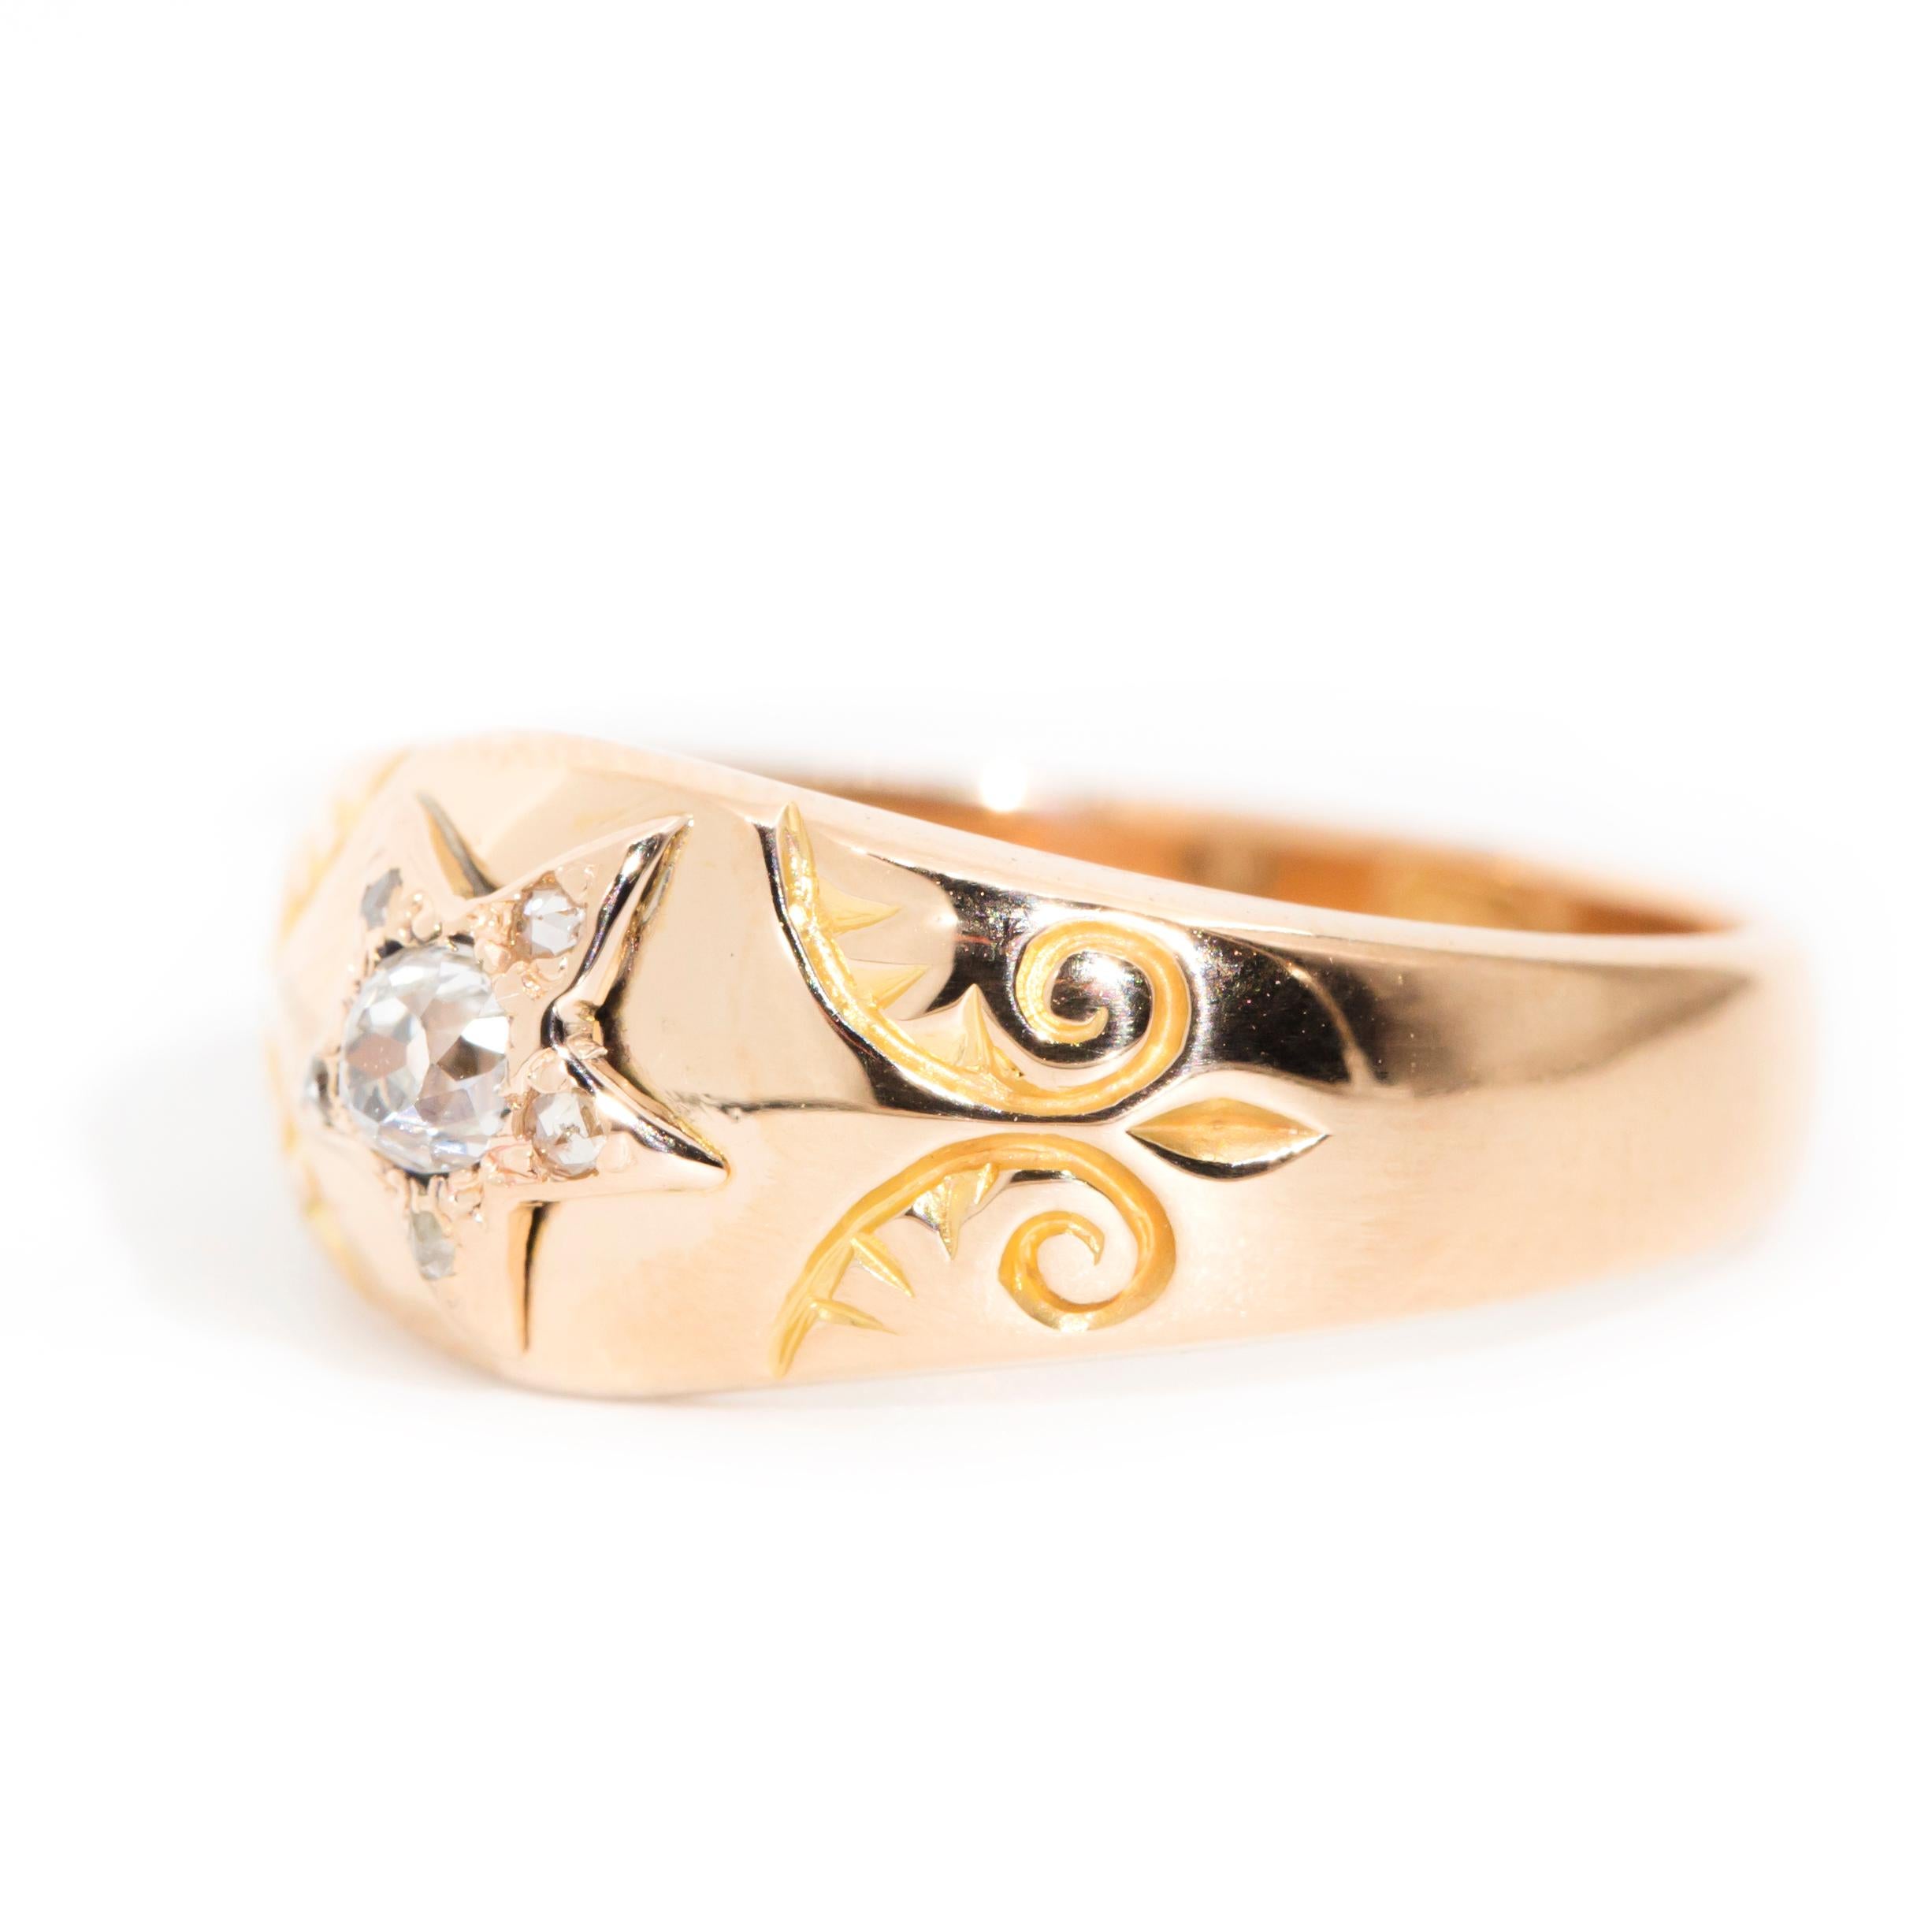 1900s Victorian Old European Cut Star Set Diamond Ring in 18 Carat Yellow Gold 9